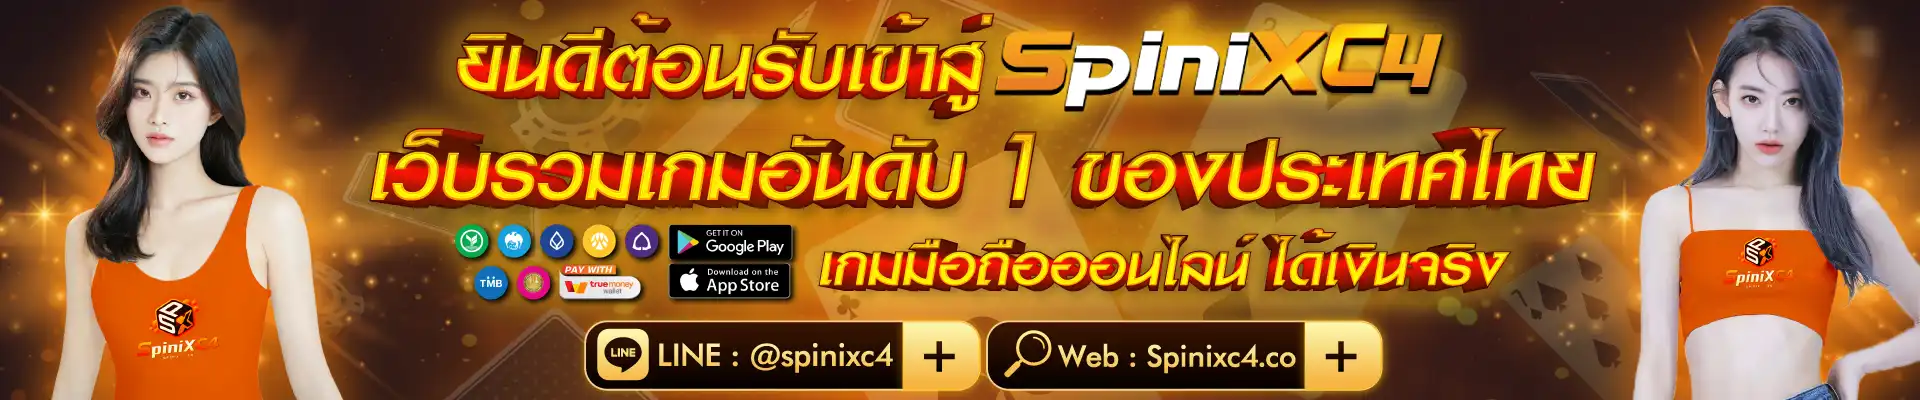 spinixc4